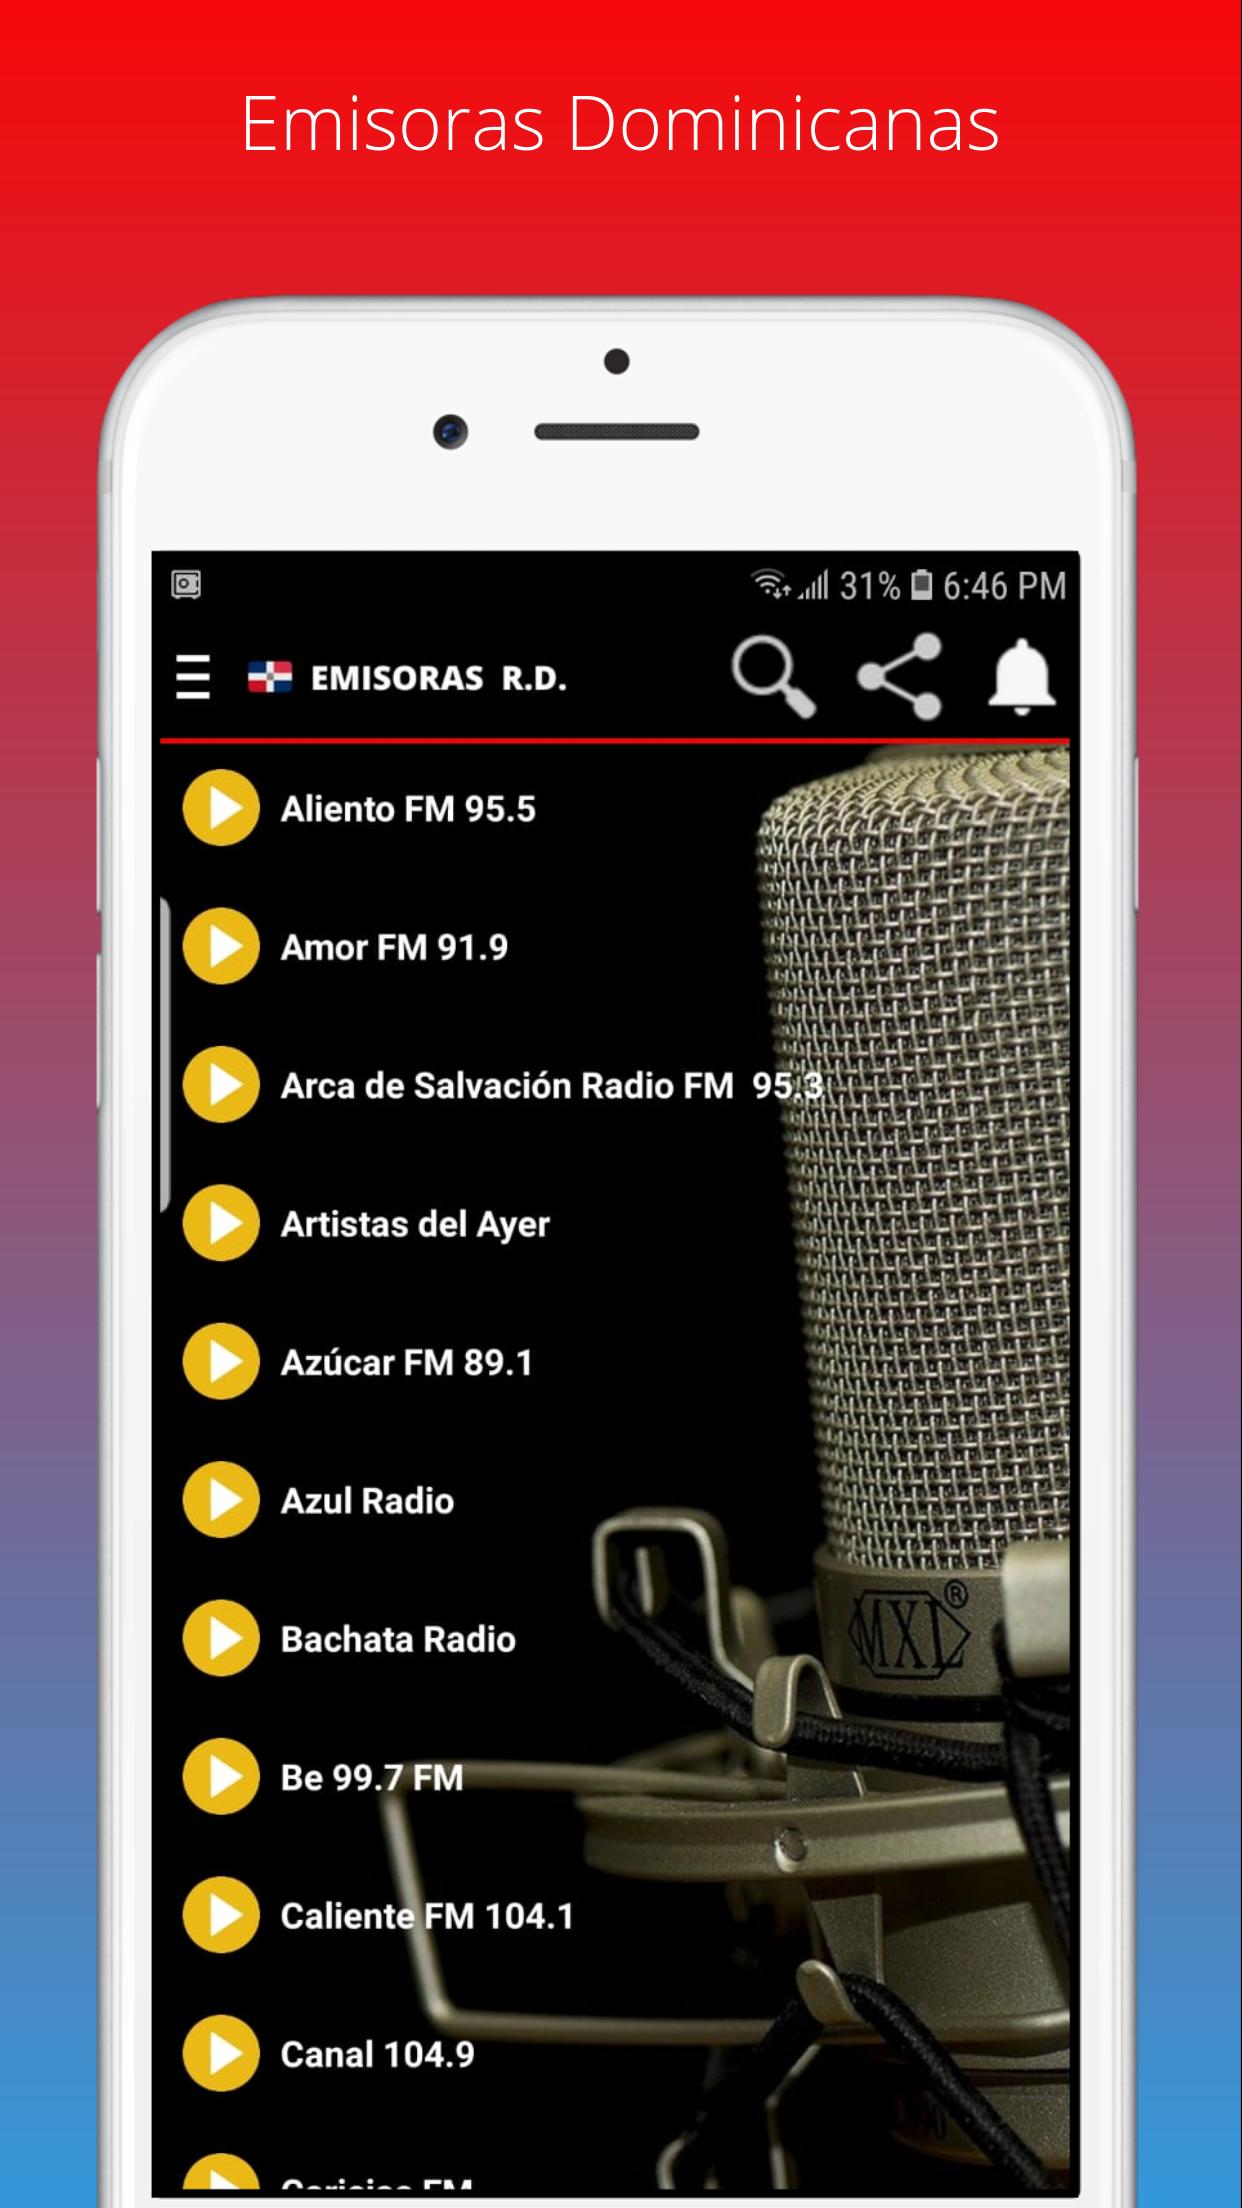 Emisoras Dominicanas - Radio Rep. Dom. APK for Android Download